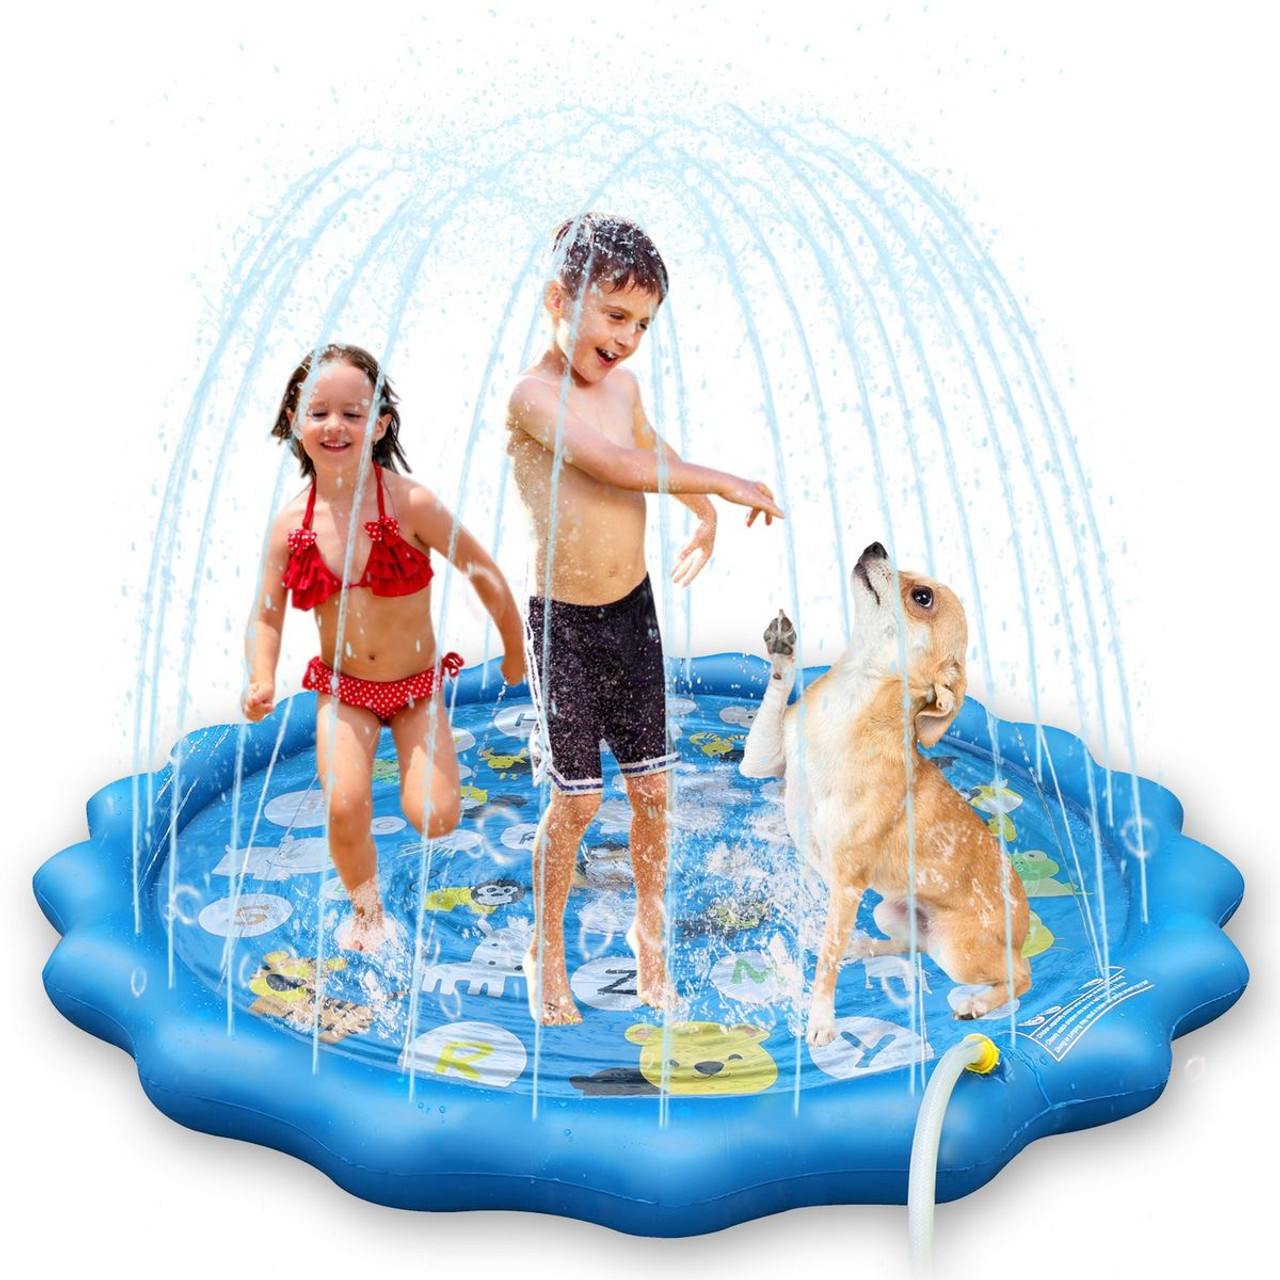 CoolWorld™ Sprinkler Splash Play Mat product image